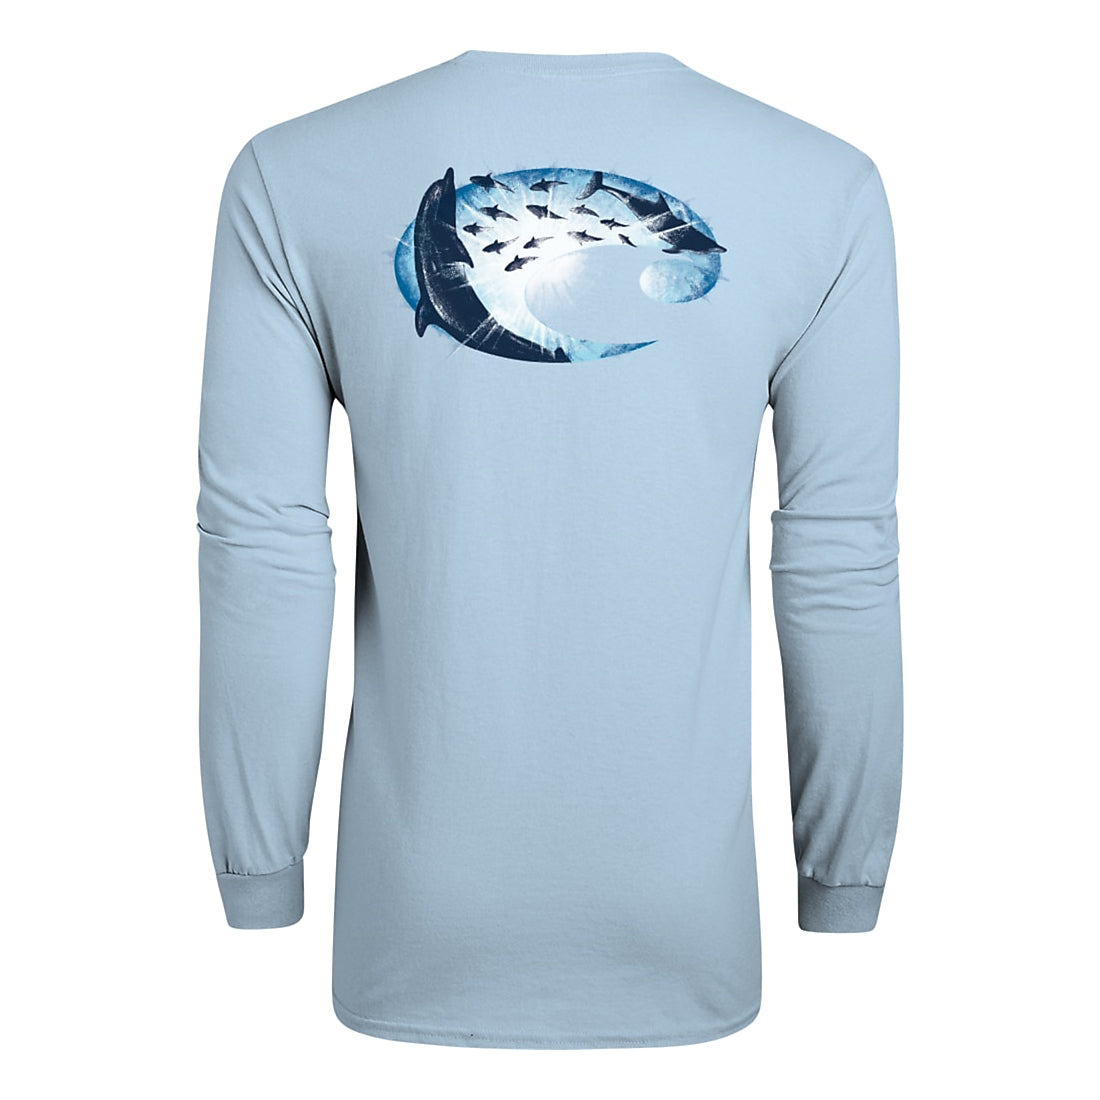 Mossy Oak Fishing Performance Salmon Crew - T-Shirts - Apparel